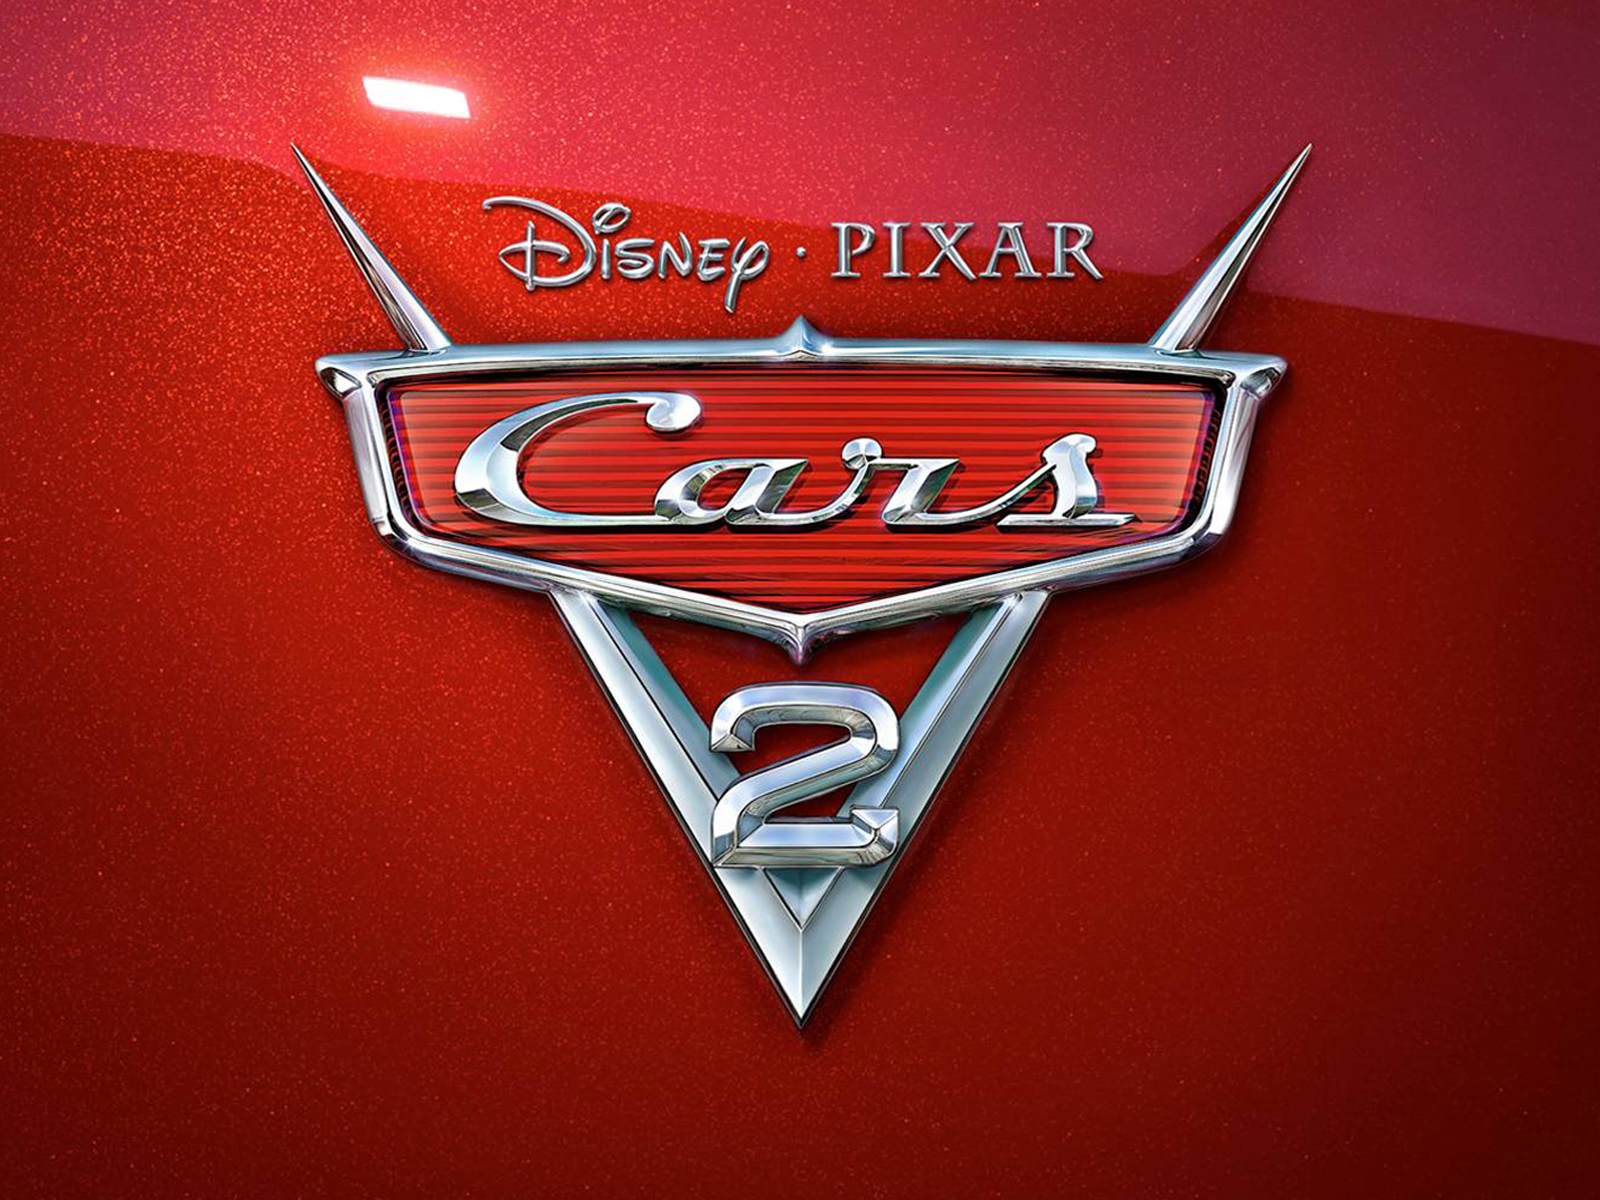 Free Disney Pixar Cars 2 computer desktop wallpapers pictures